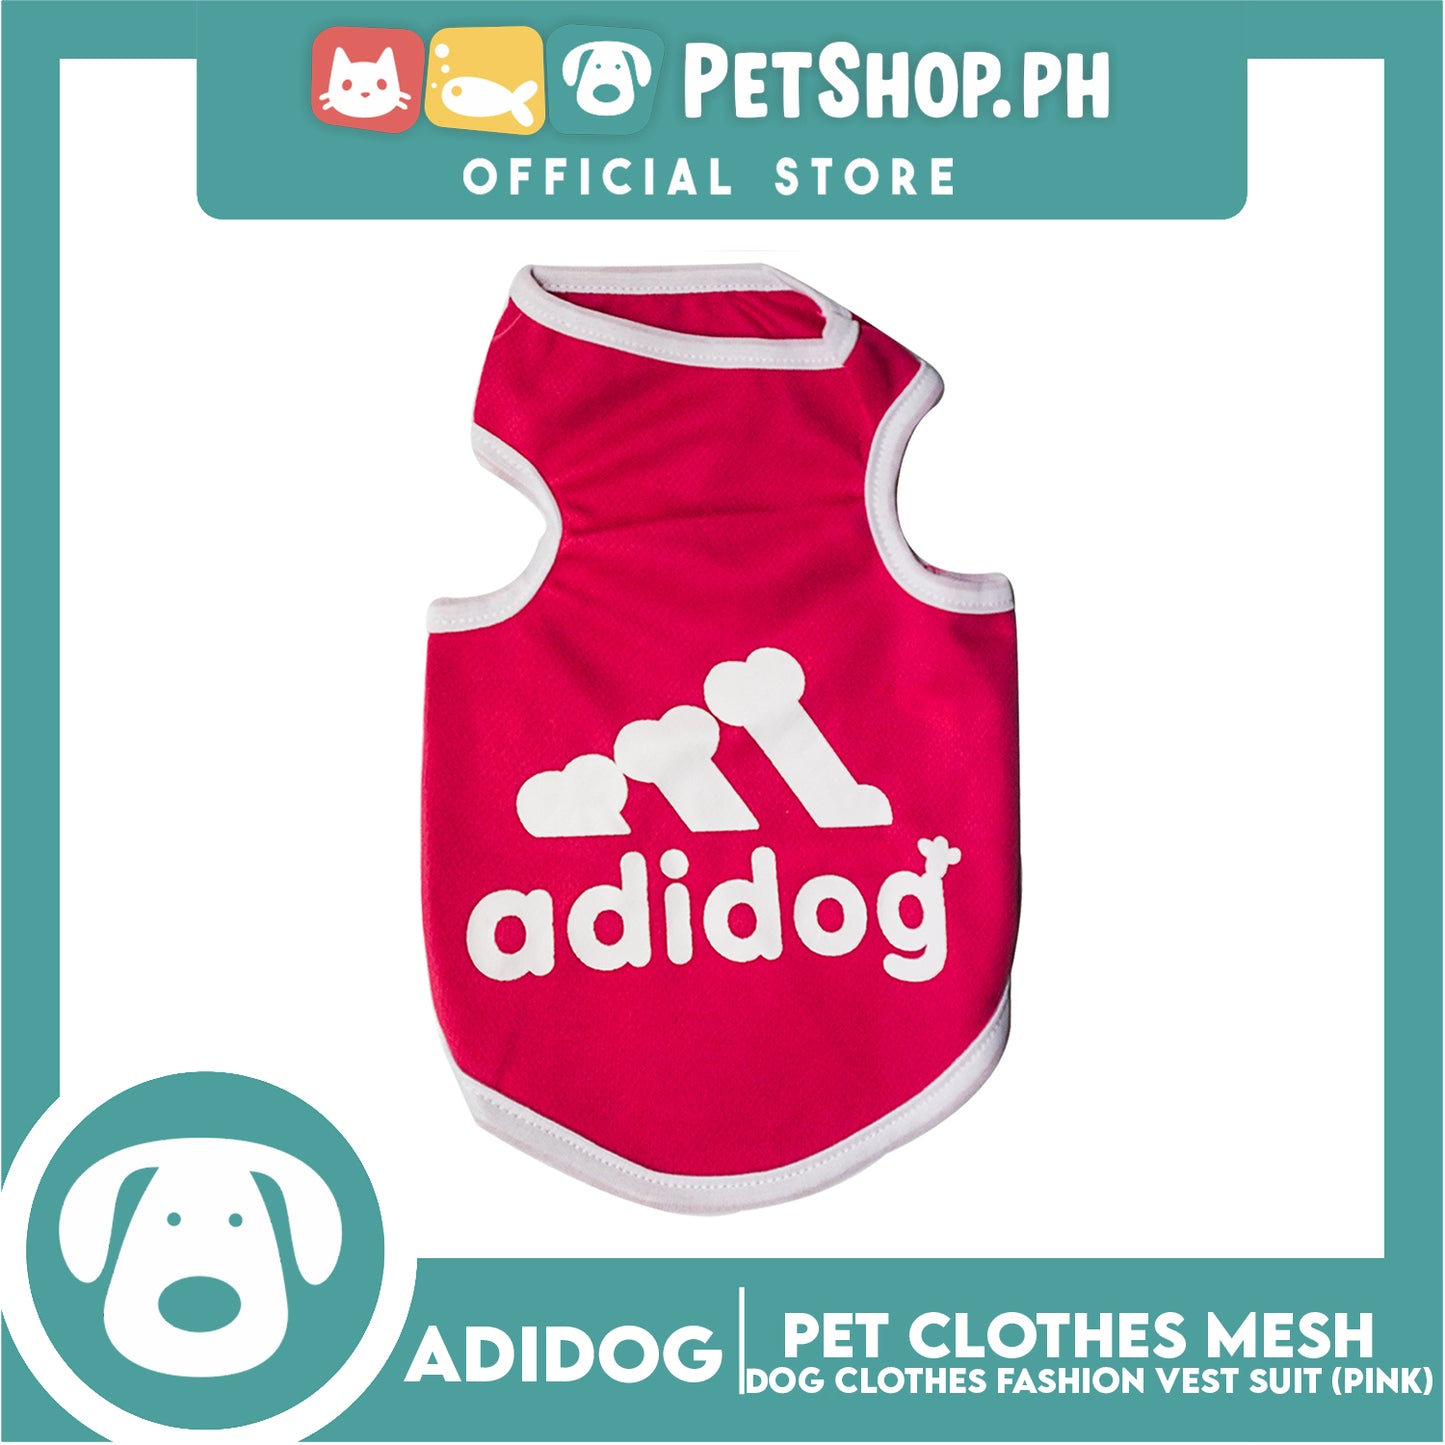 Adidog Pet Clothes Mesh Vet, Summer Dog Clothes, Breathable Mesh Vet, Dog Shirt, Pet Jersey, Fashion Vest Suit for Dogs (Pink) (Large)